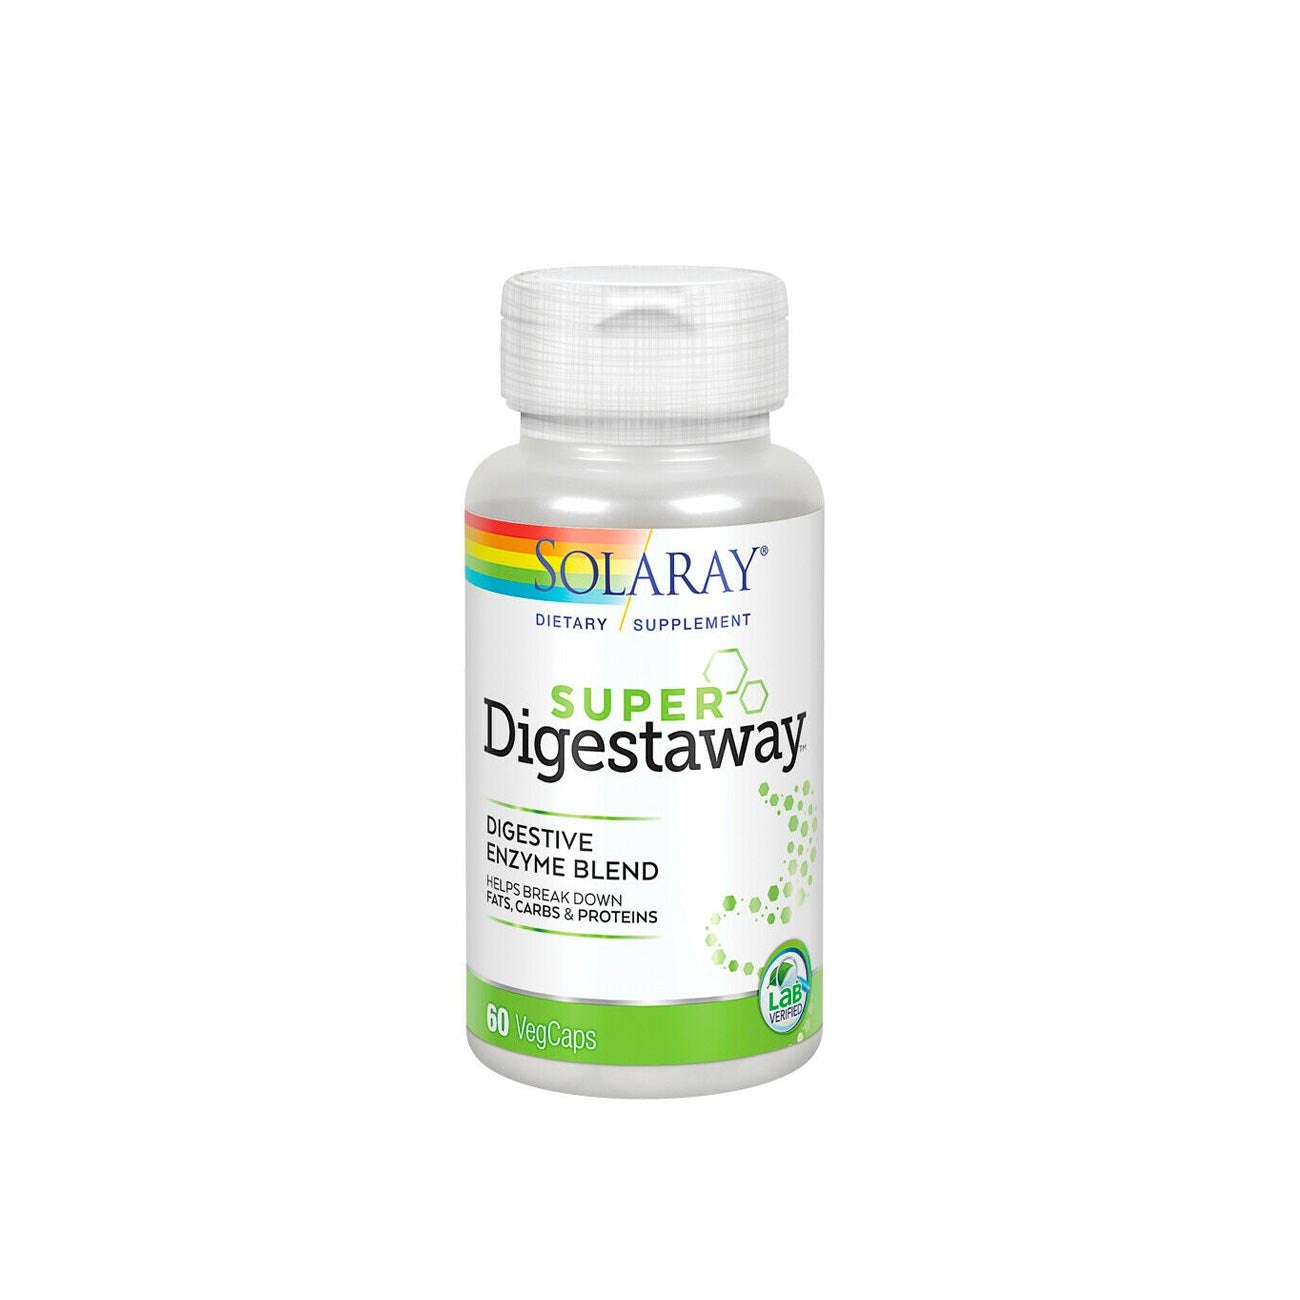 SOLARAY Super Digestaway Digestive Enzyme Blend - CITYPARA